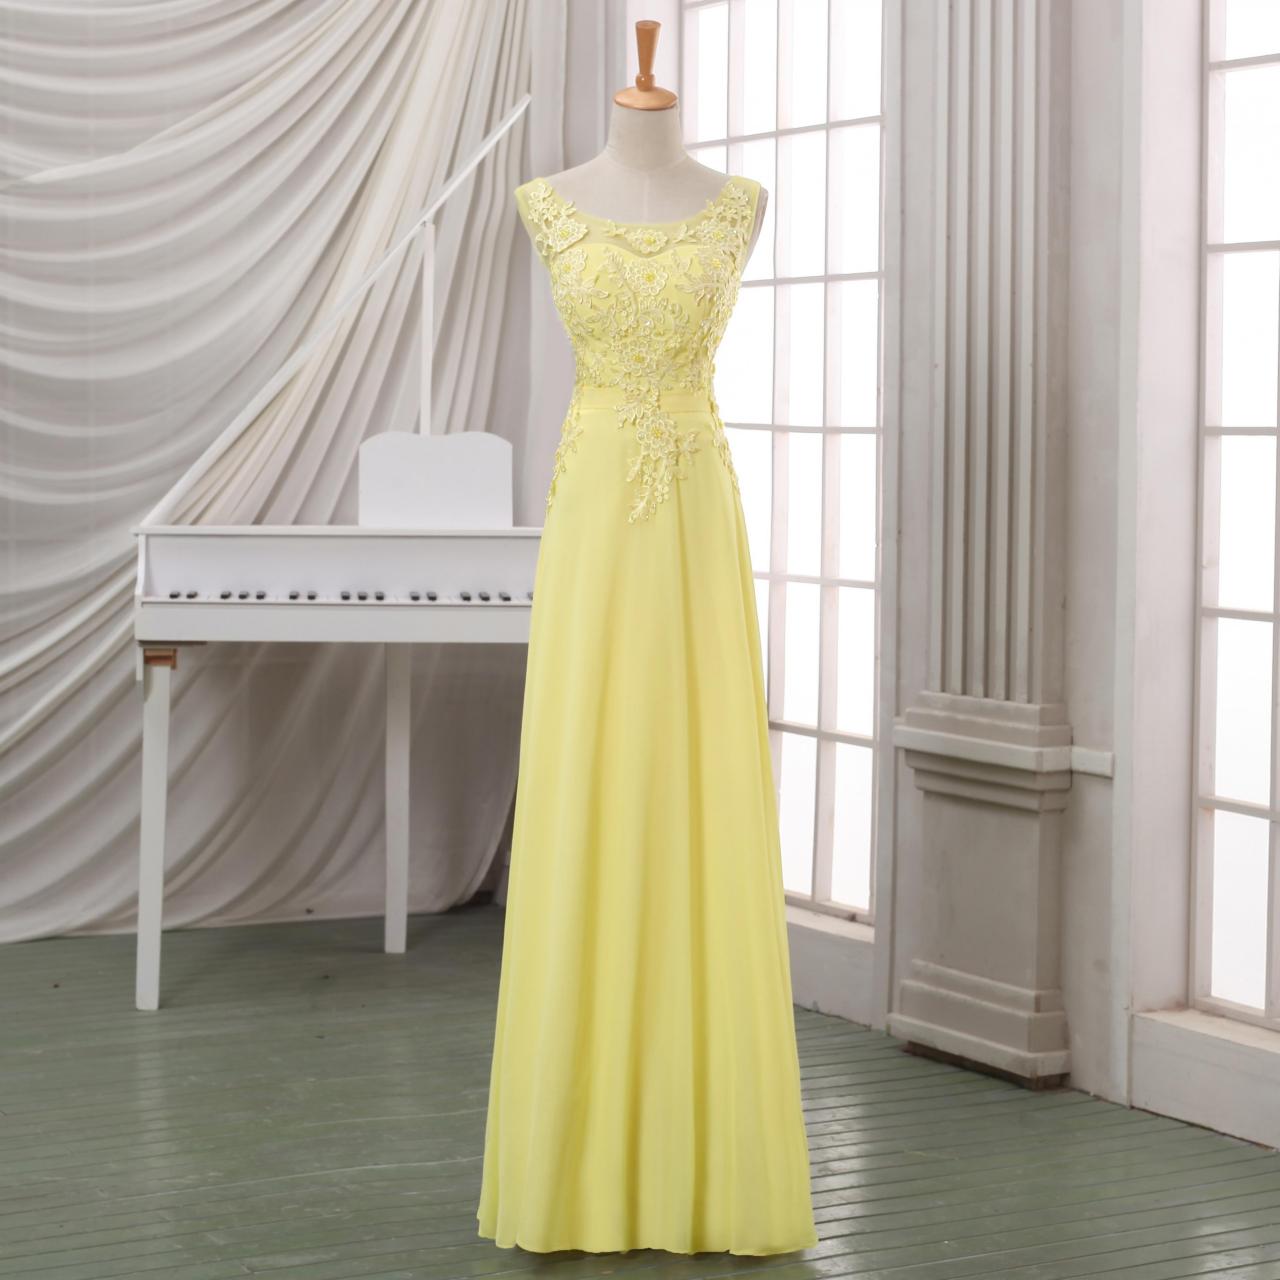 2016 Yellow Lace Evening Dress,lace Appliqued V Back Evening Dress/prom Dress,yellow Maxi Dress,yellow Lace Pageant Dress.